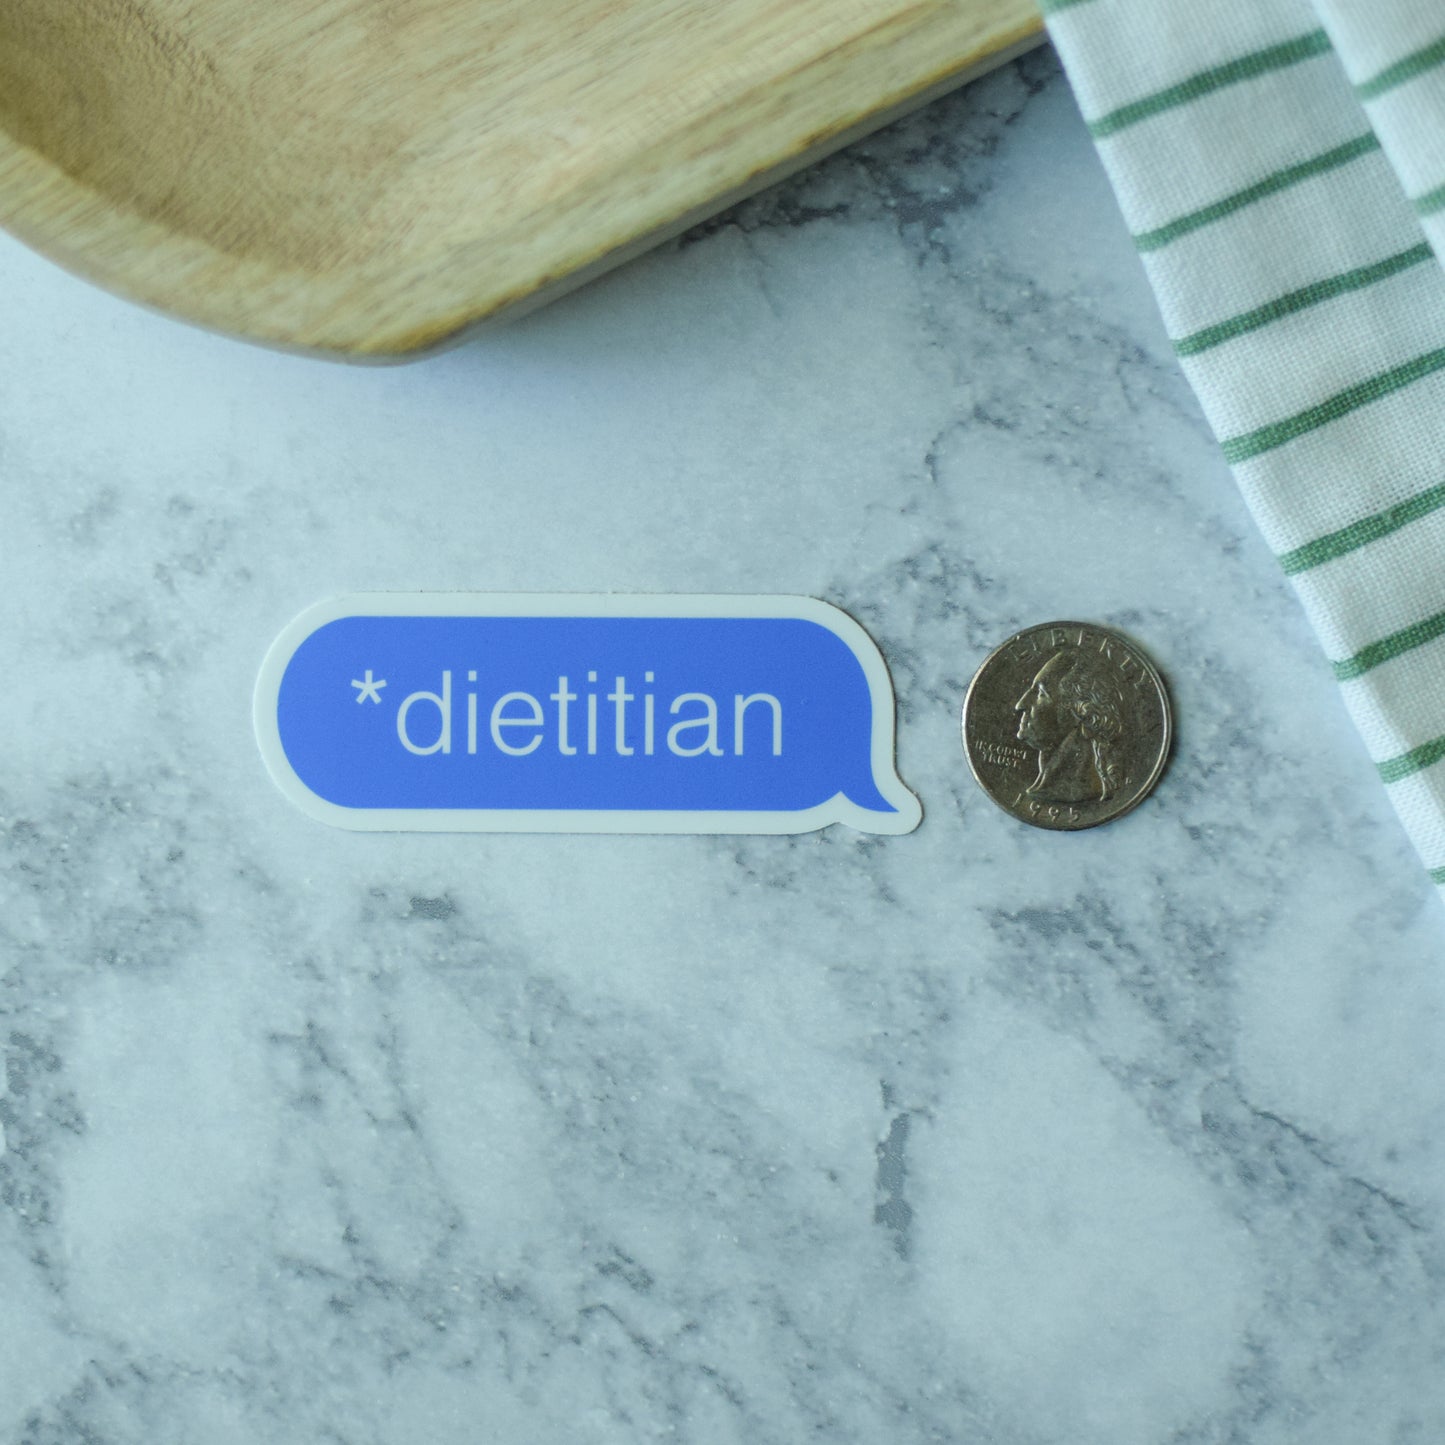 Dietitian Typo Correction Sticker